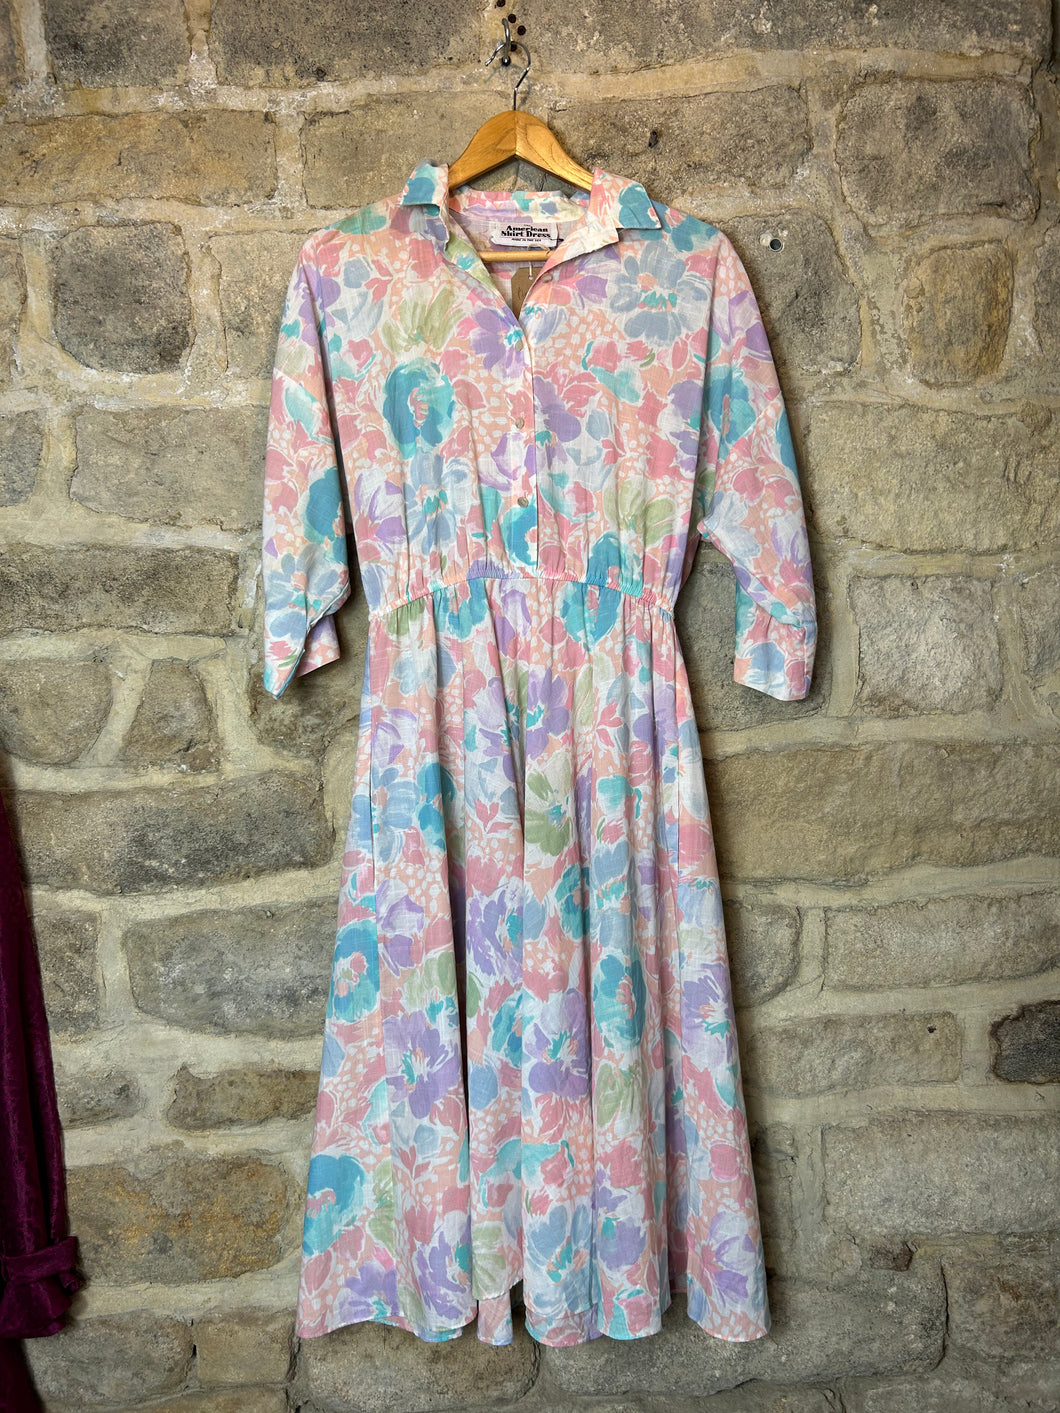 1980s floral circle skirt dress